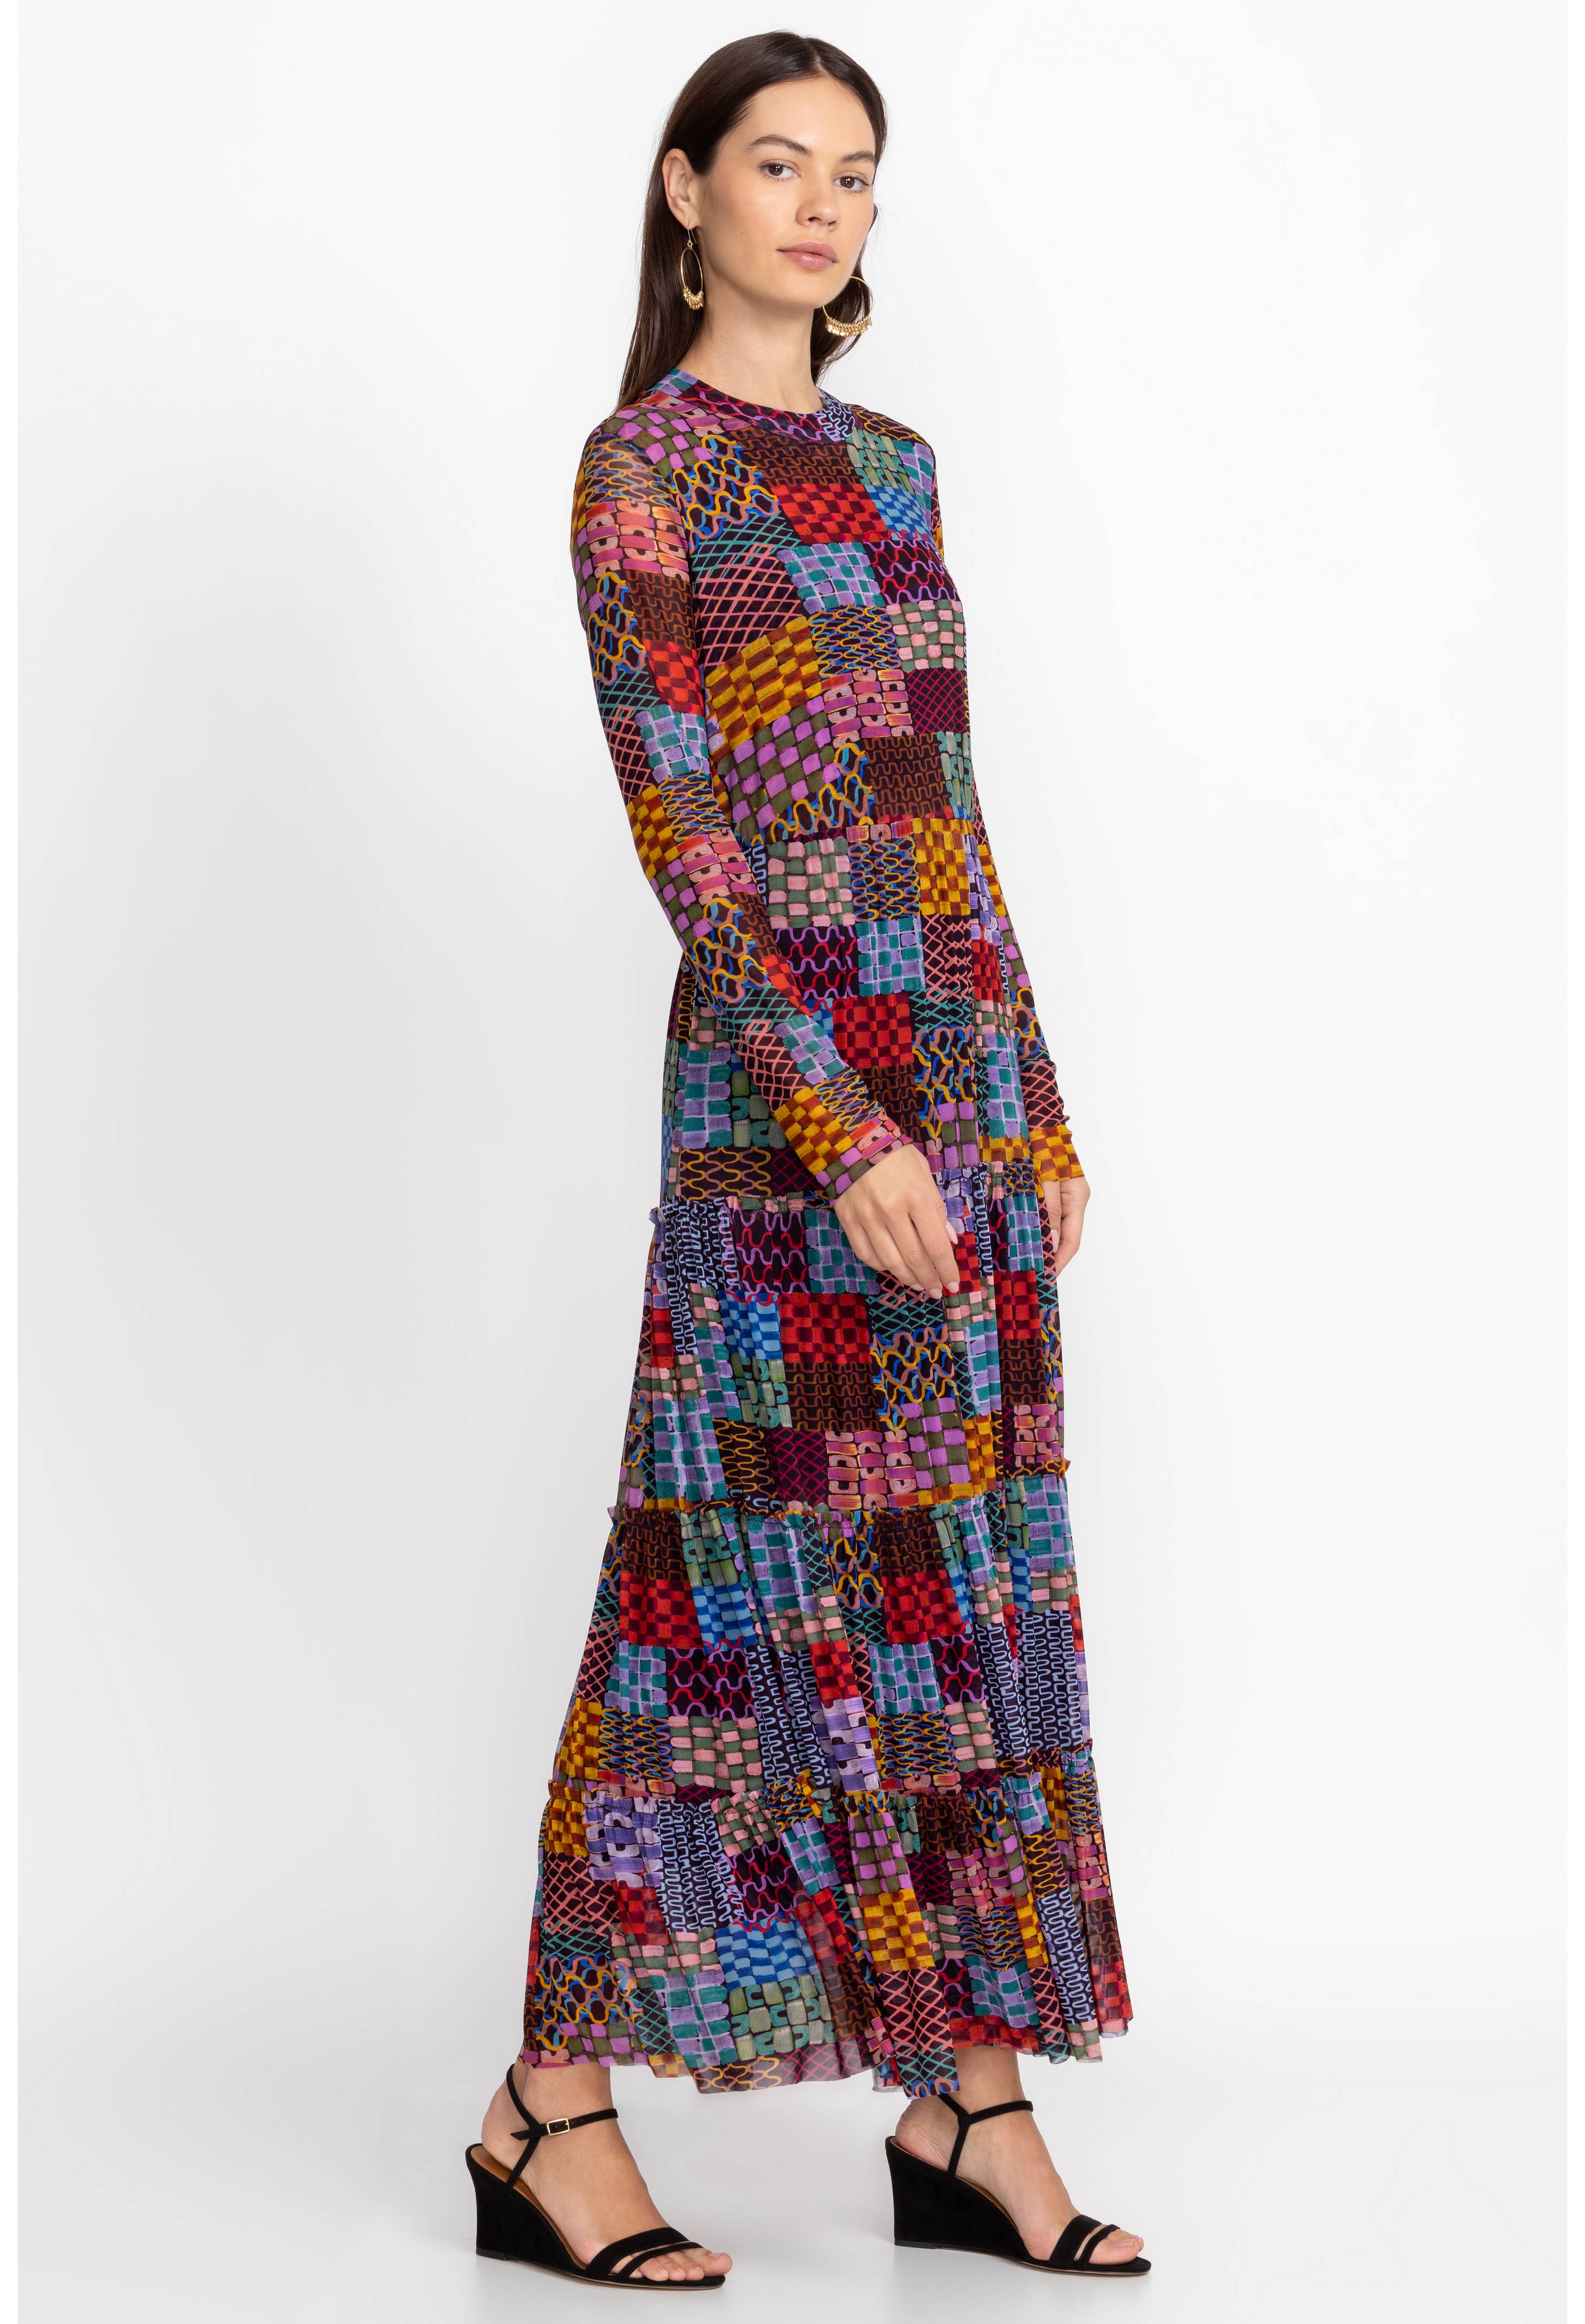 Isadora Waves Mesh Midi Dress, , large image number 2